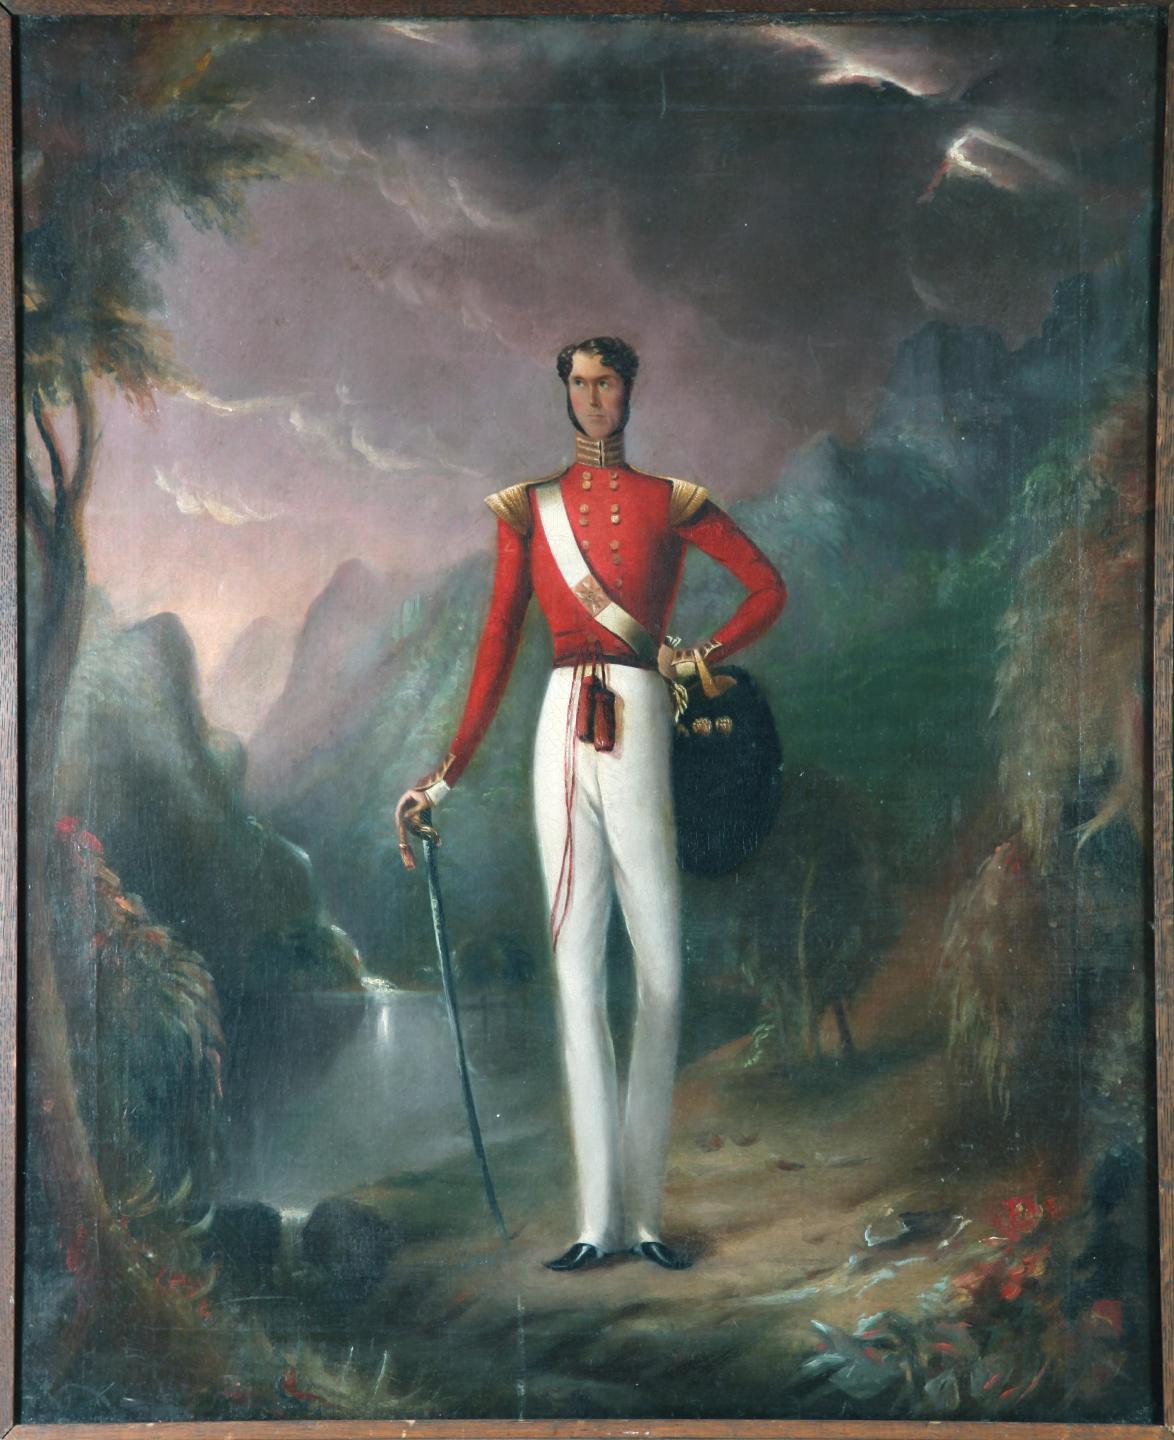 Daniel Macdonald (attributed), General Sir Rowland Smyth K.C.B., c.1845, oil on canvas, 76 x 61 cm. Purchased, 2003.